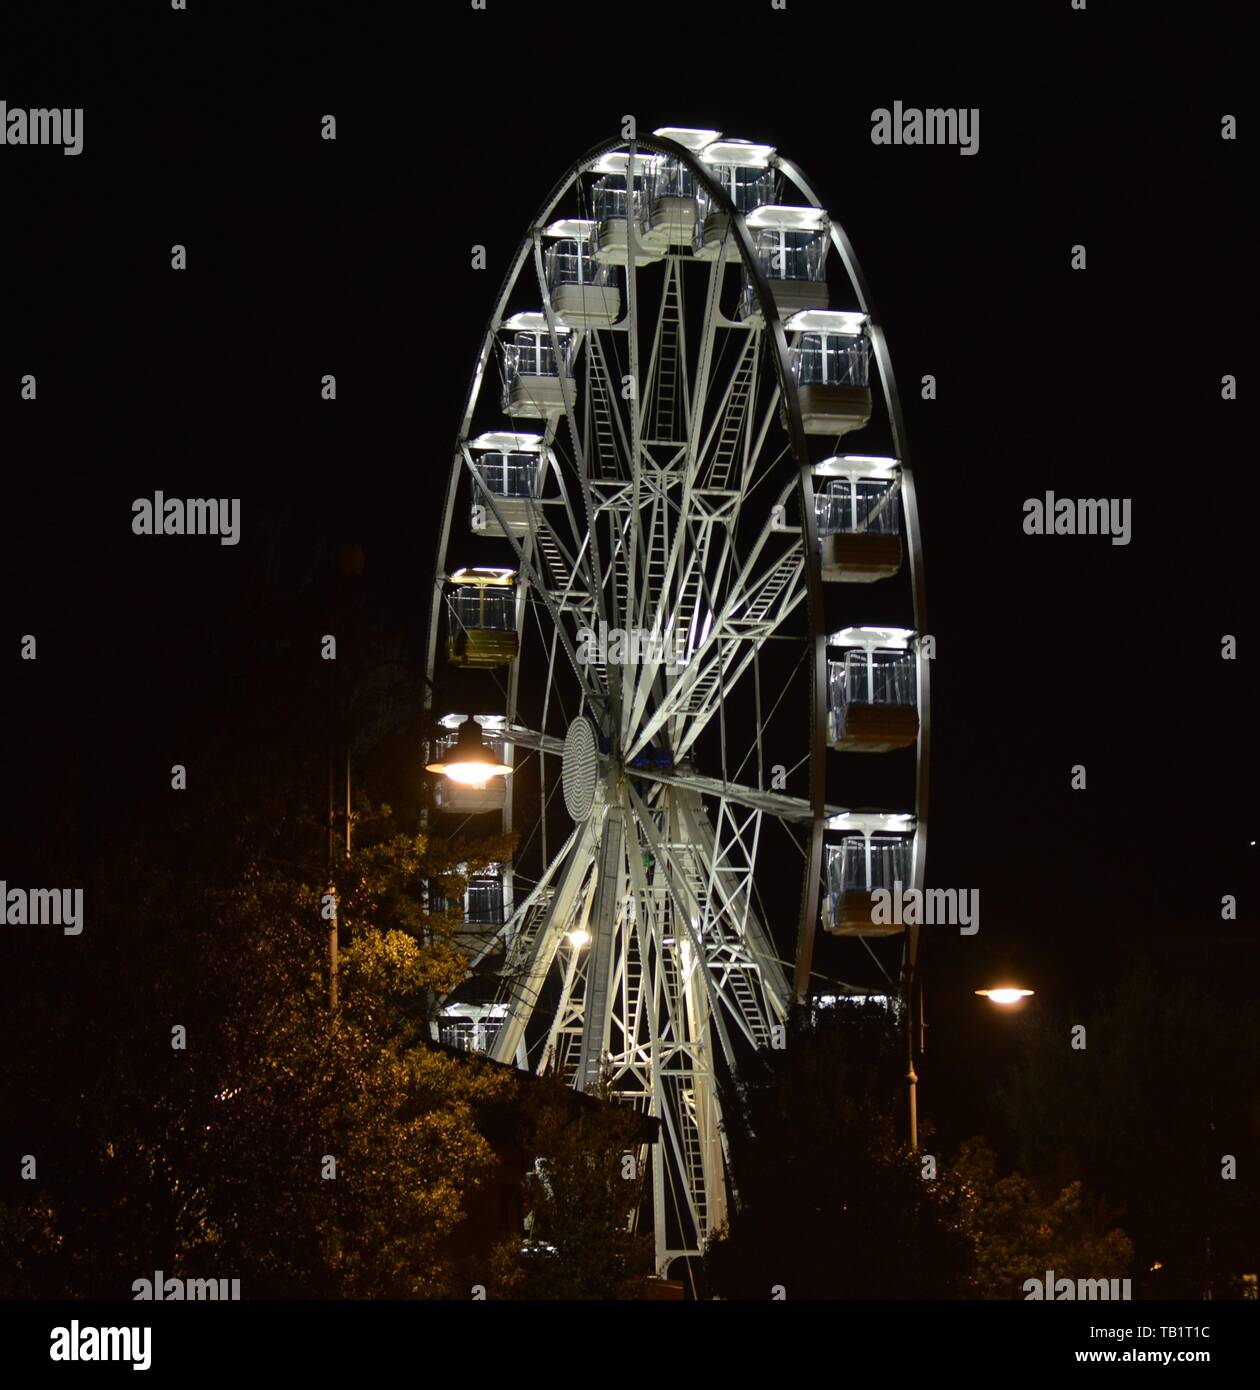 Illuminated ferris wheel, night photography Stock Photo